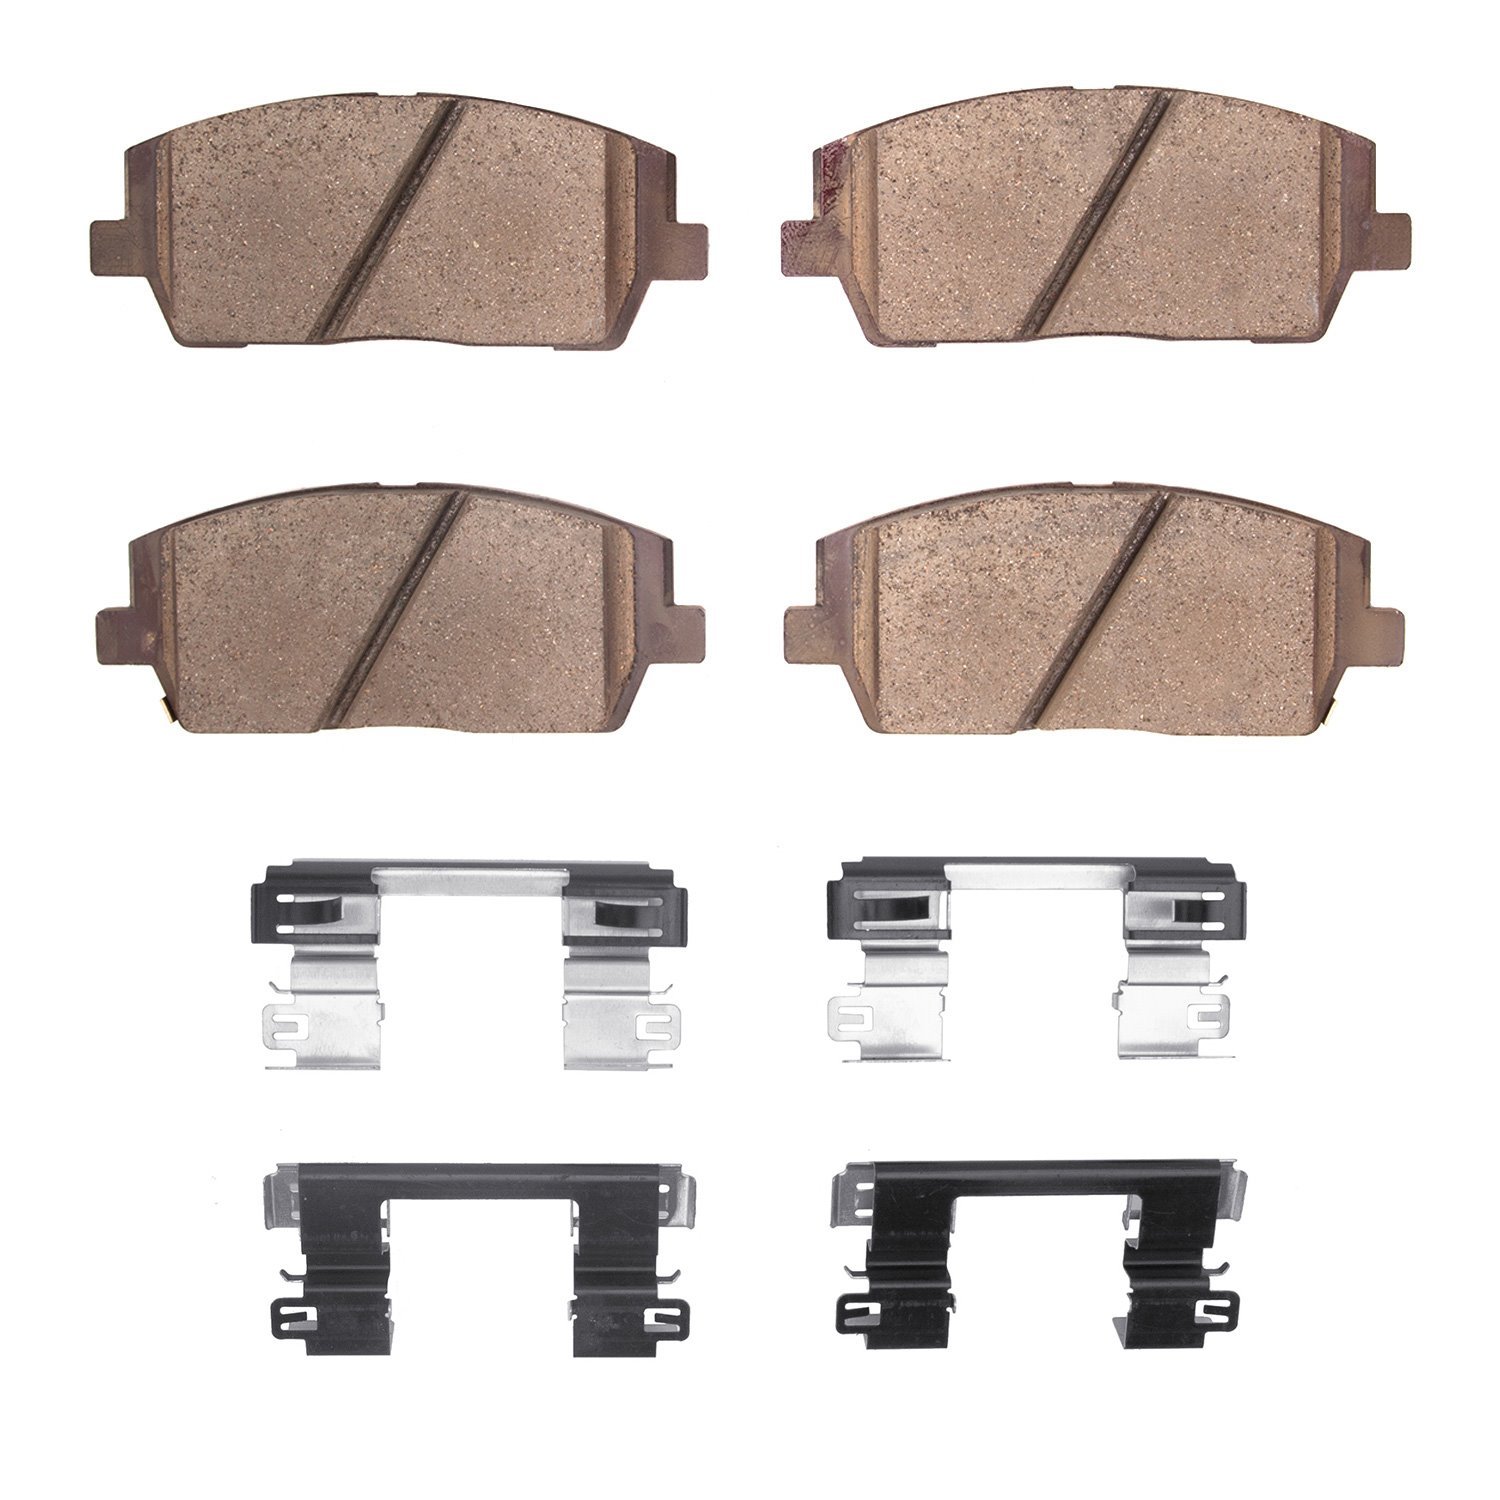 1310-2215-01 3000-Series Ceramic Brake Pads & Hardware Kit, Fits Select Kia/Hyundai/Genesis, Position: Front